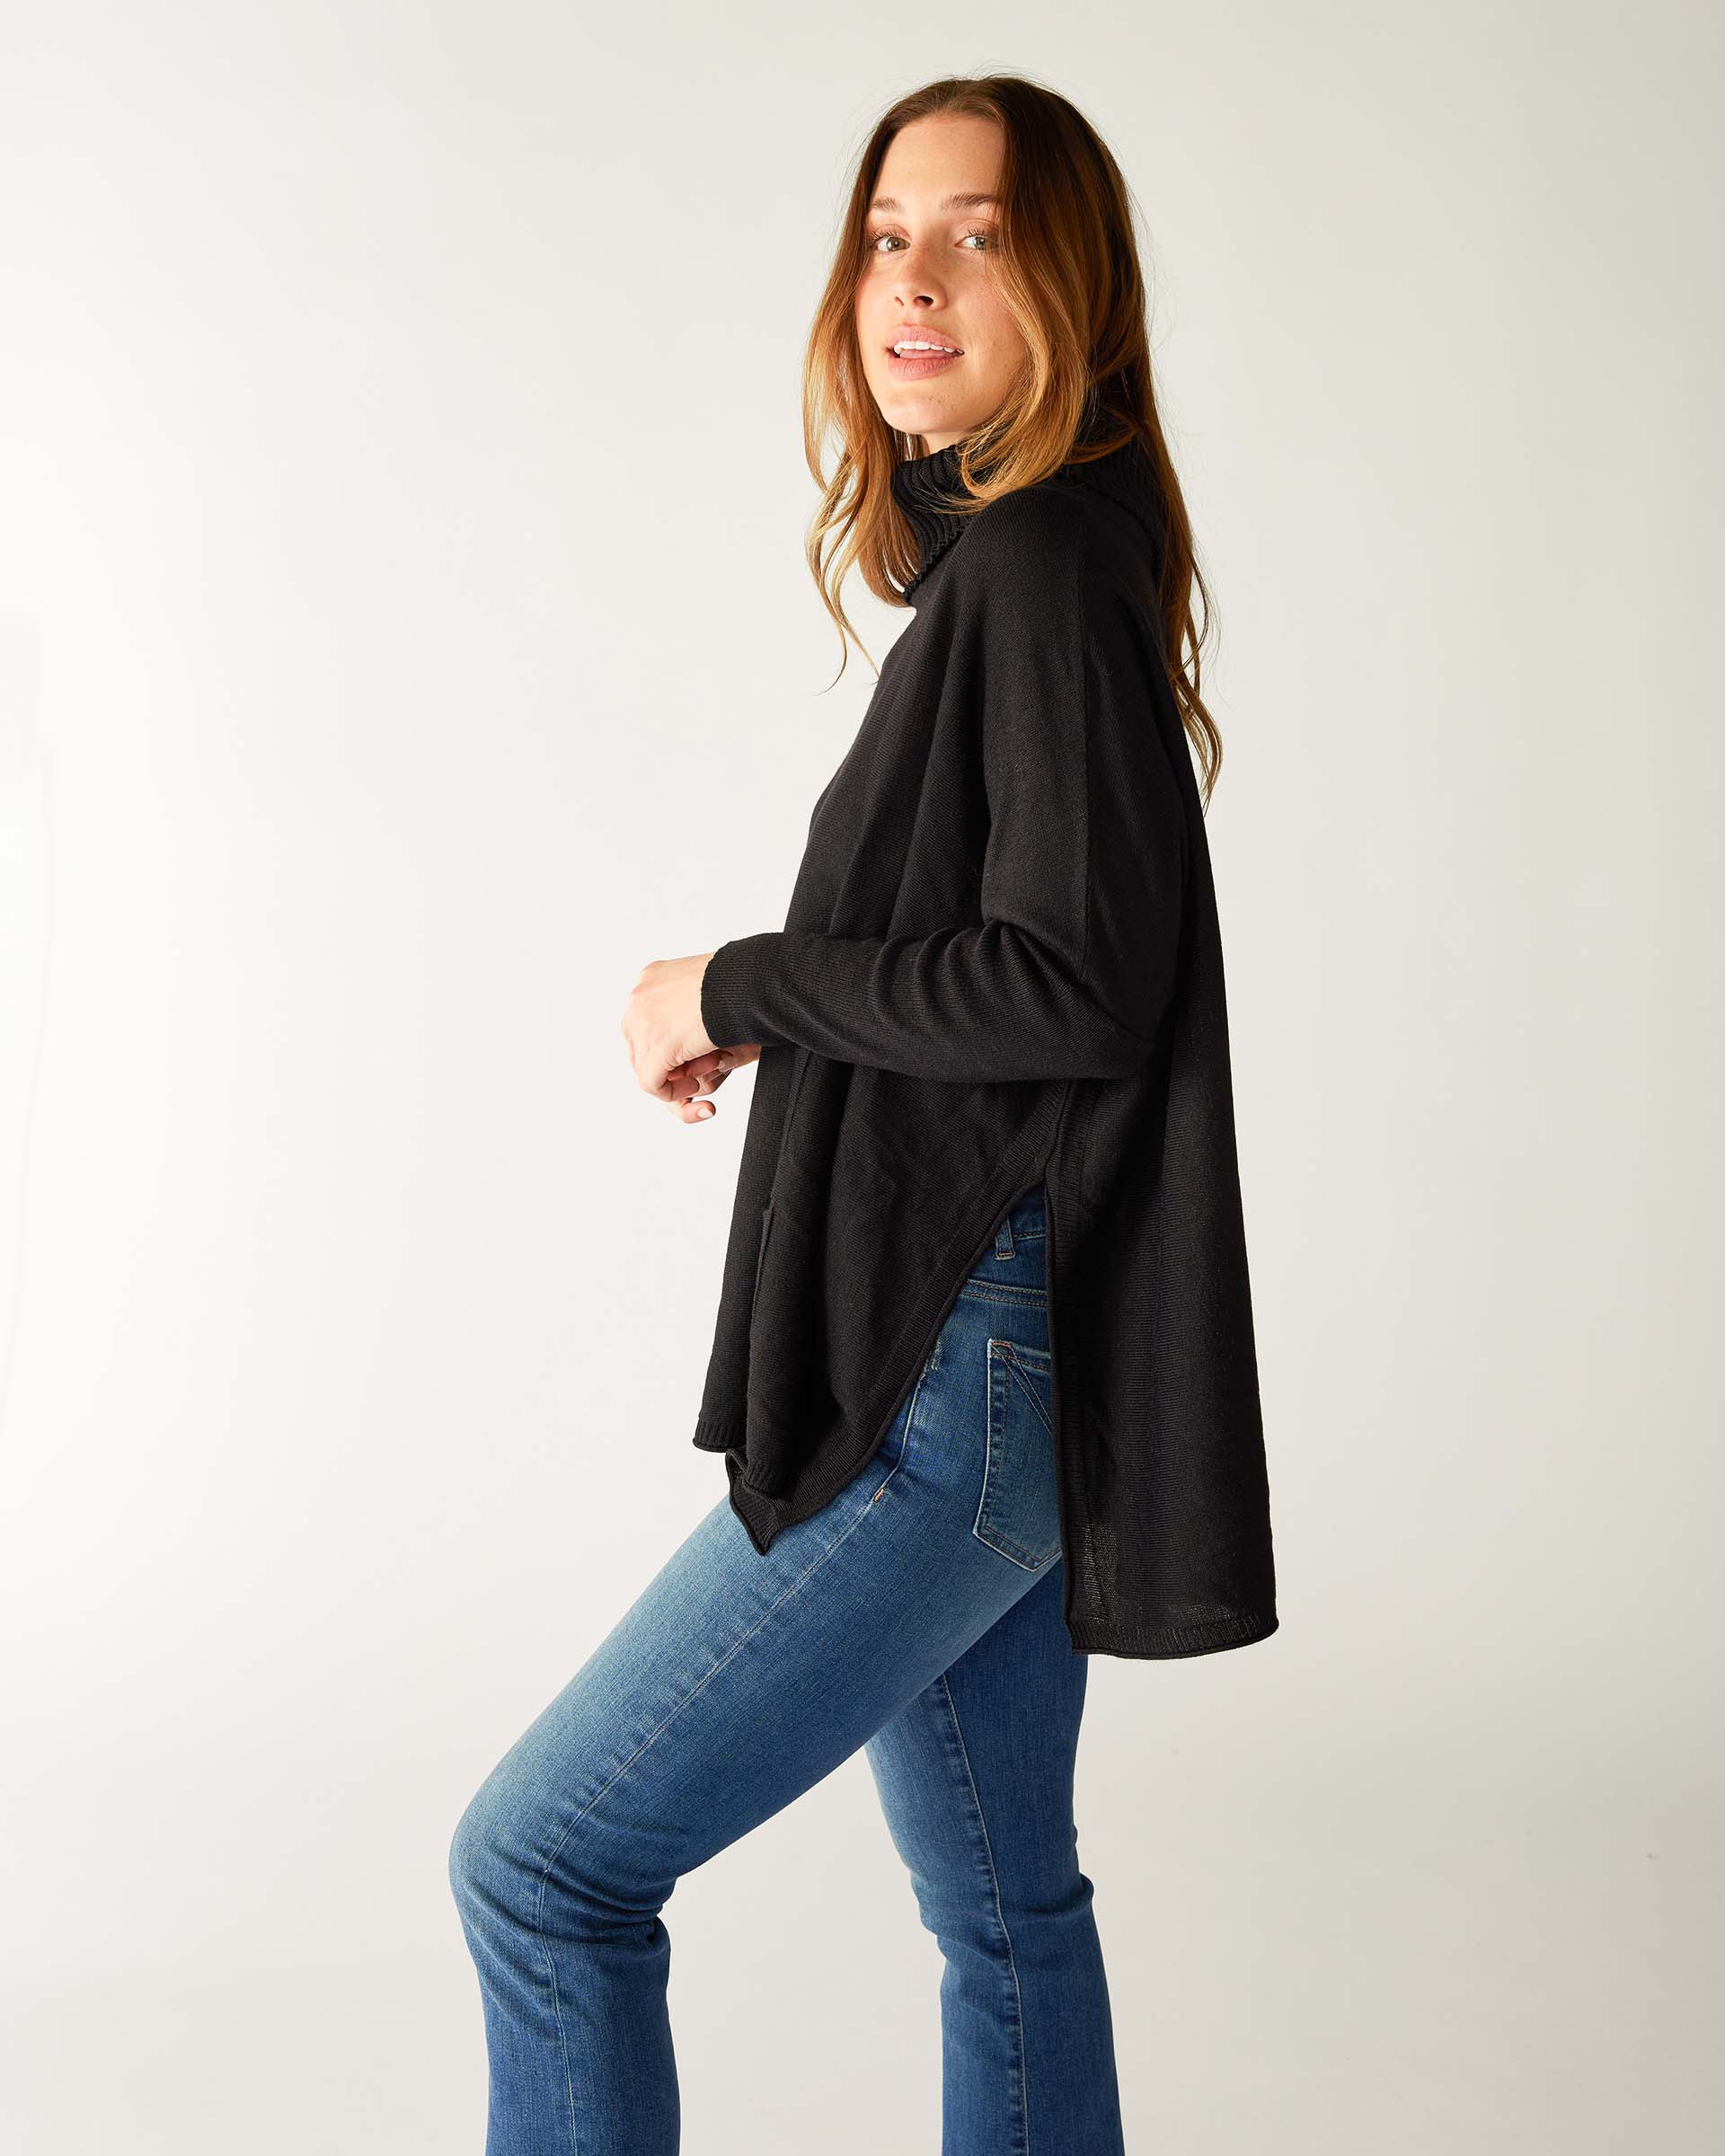 profile of woman wearing lightweight knit mersea catalina turtleneck sweater in black